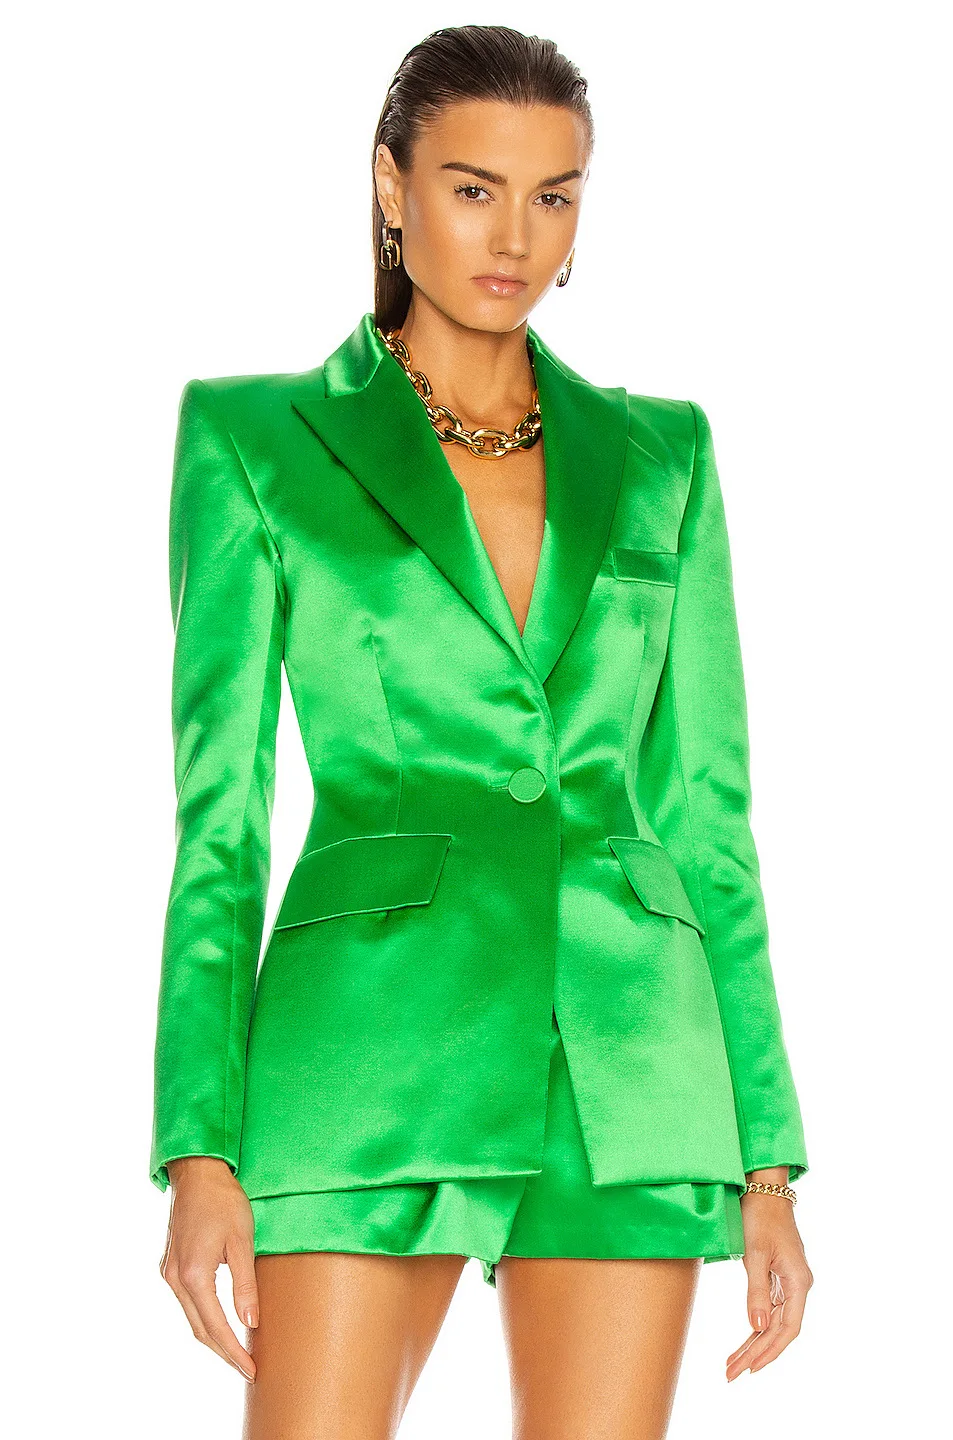 Green Summer Satin Wholesale Custom Made Office Jacket Women's Suits 2Piece Blazer Short Pants Ladies Wedding Party Wear Clothes